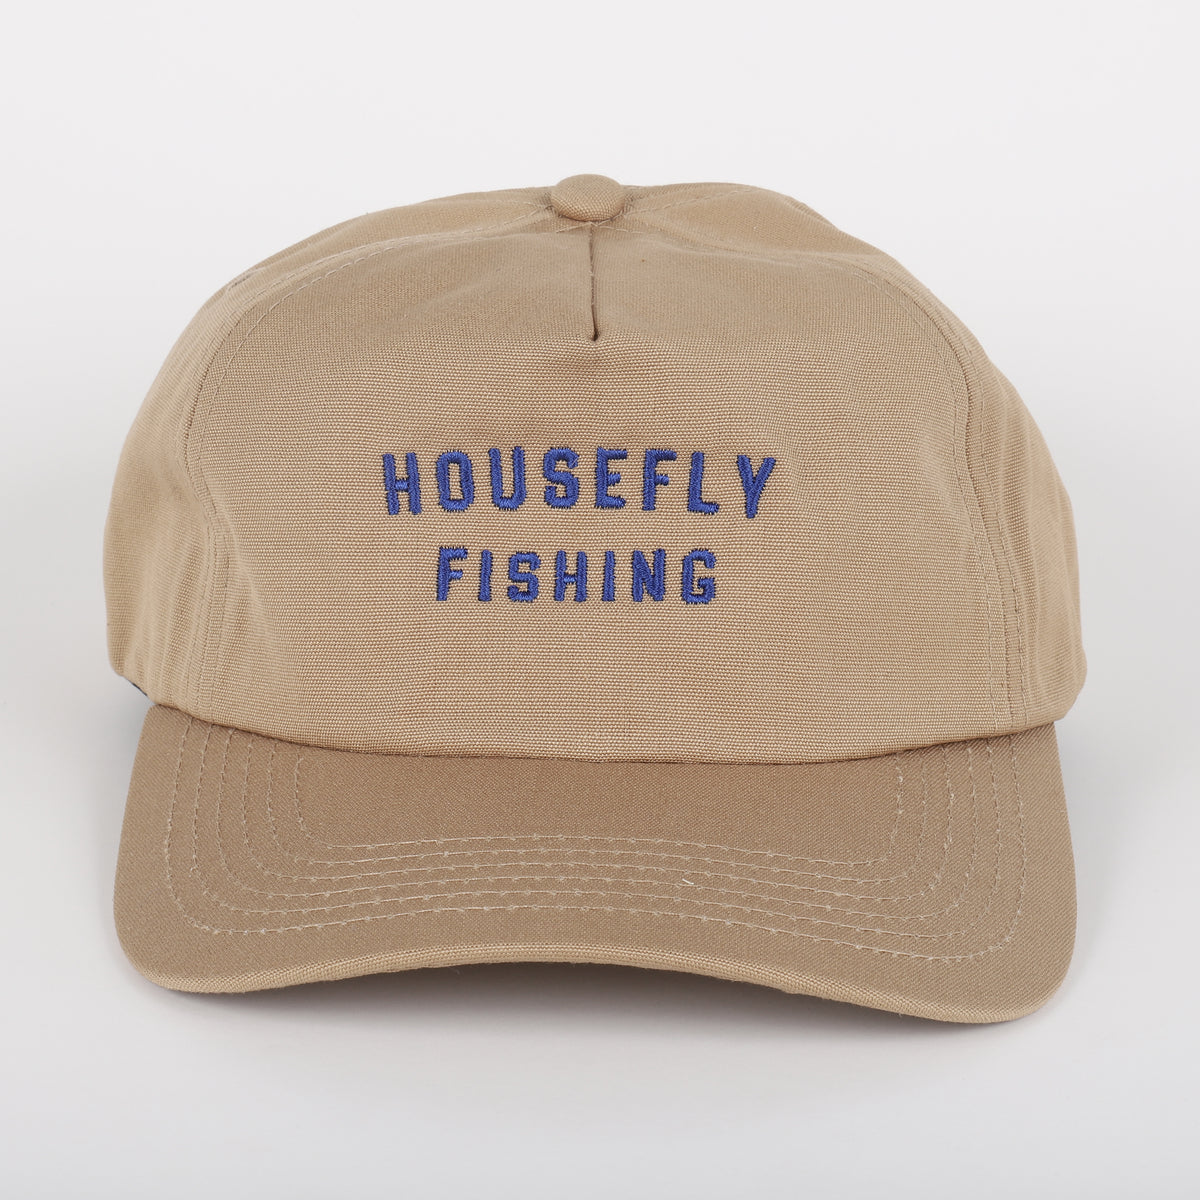 Housefly Fishing Hat - Khaki / Blue